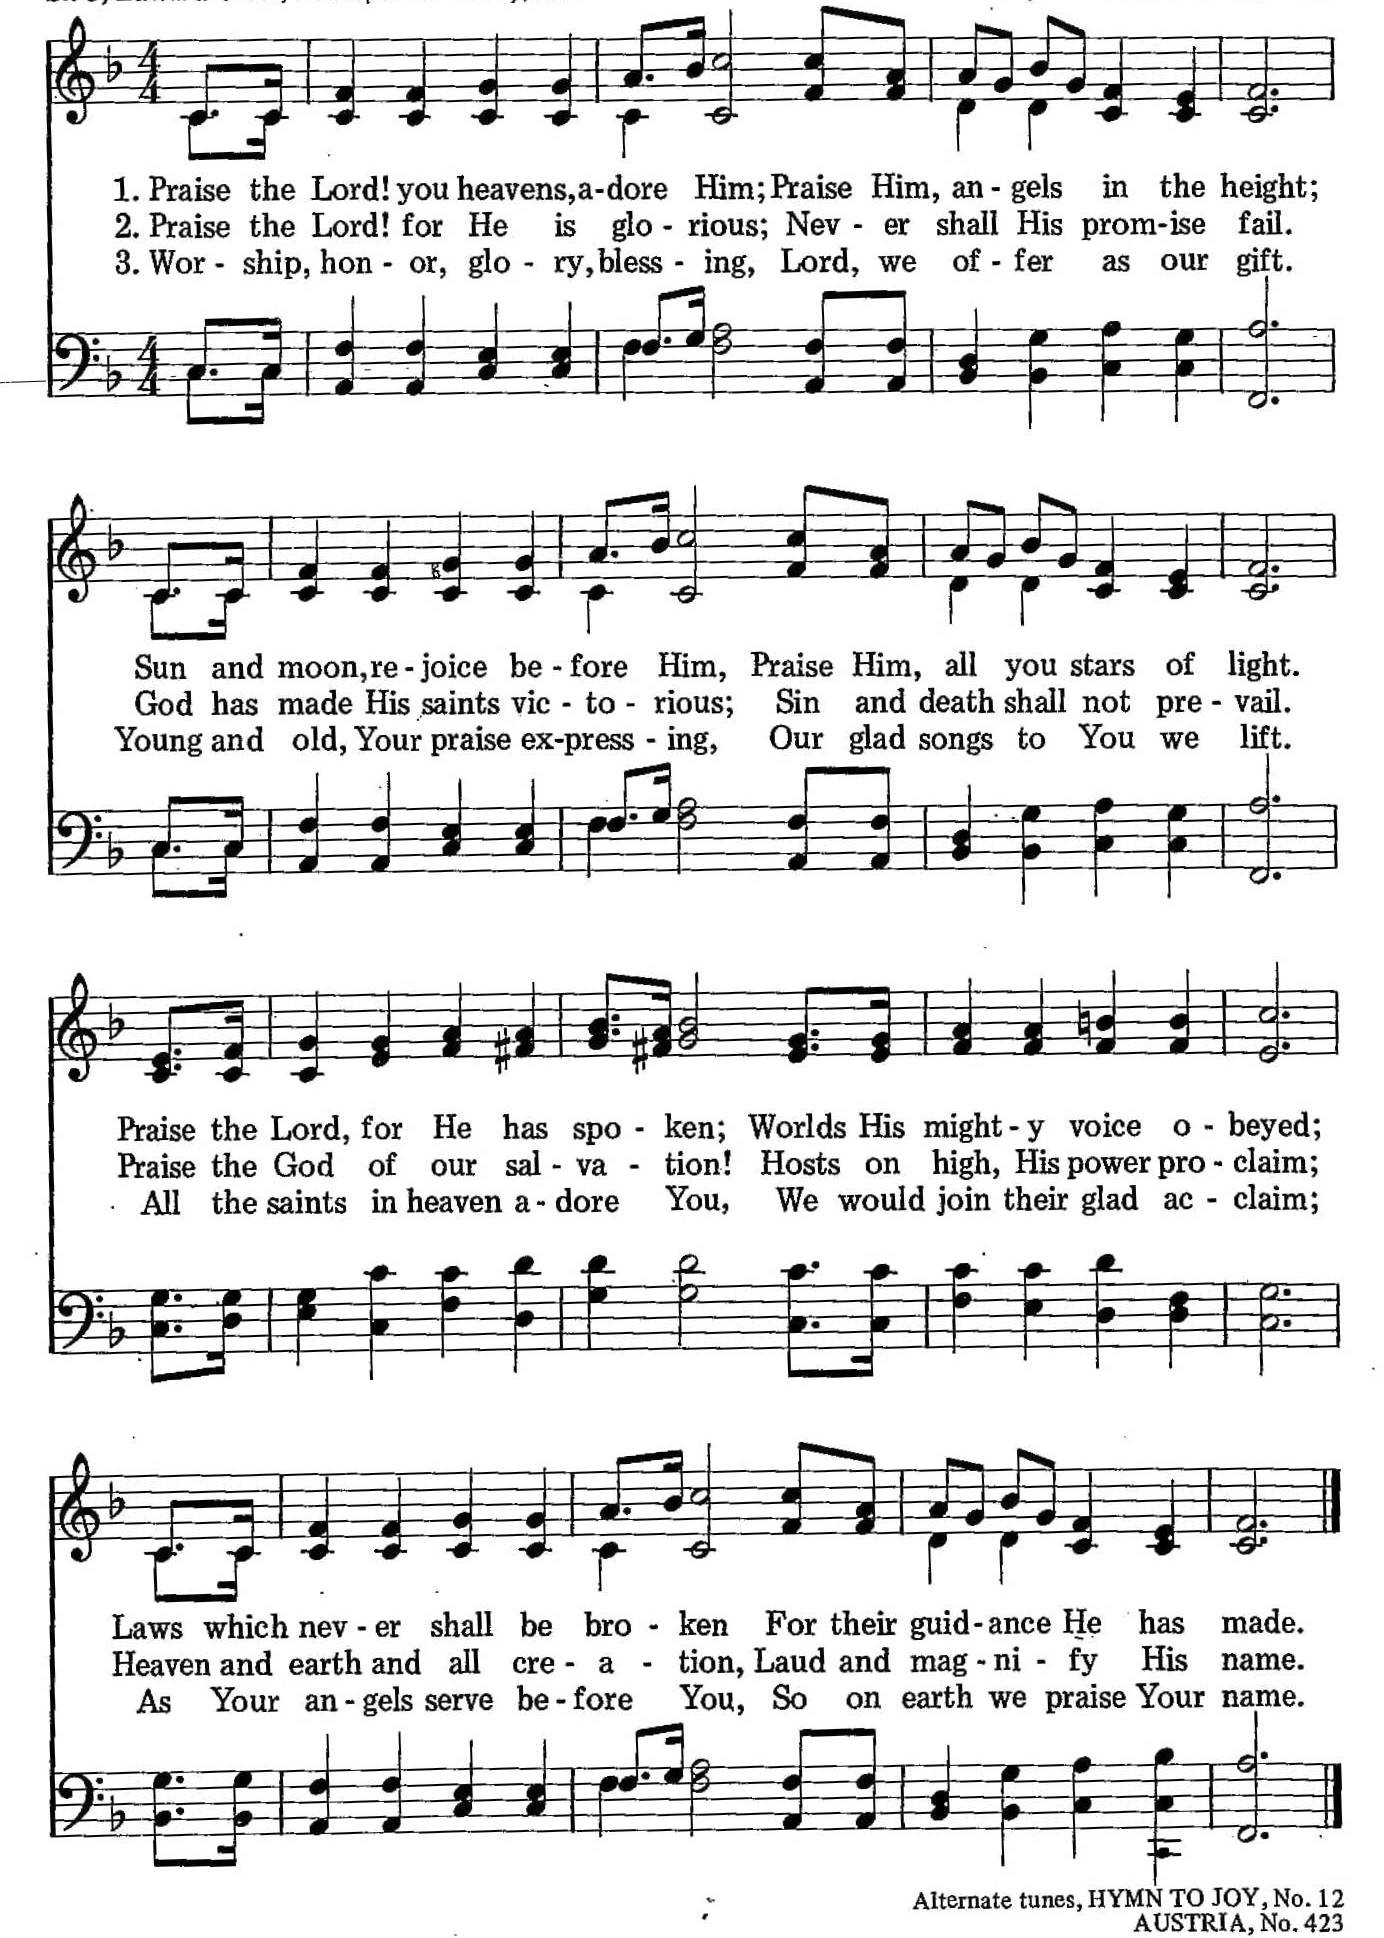 026 – Praise the Lord! You Heavens Adore Him sheet music